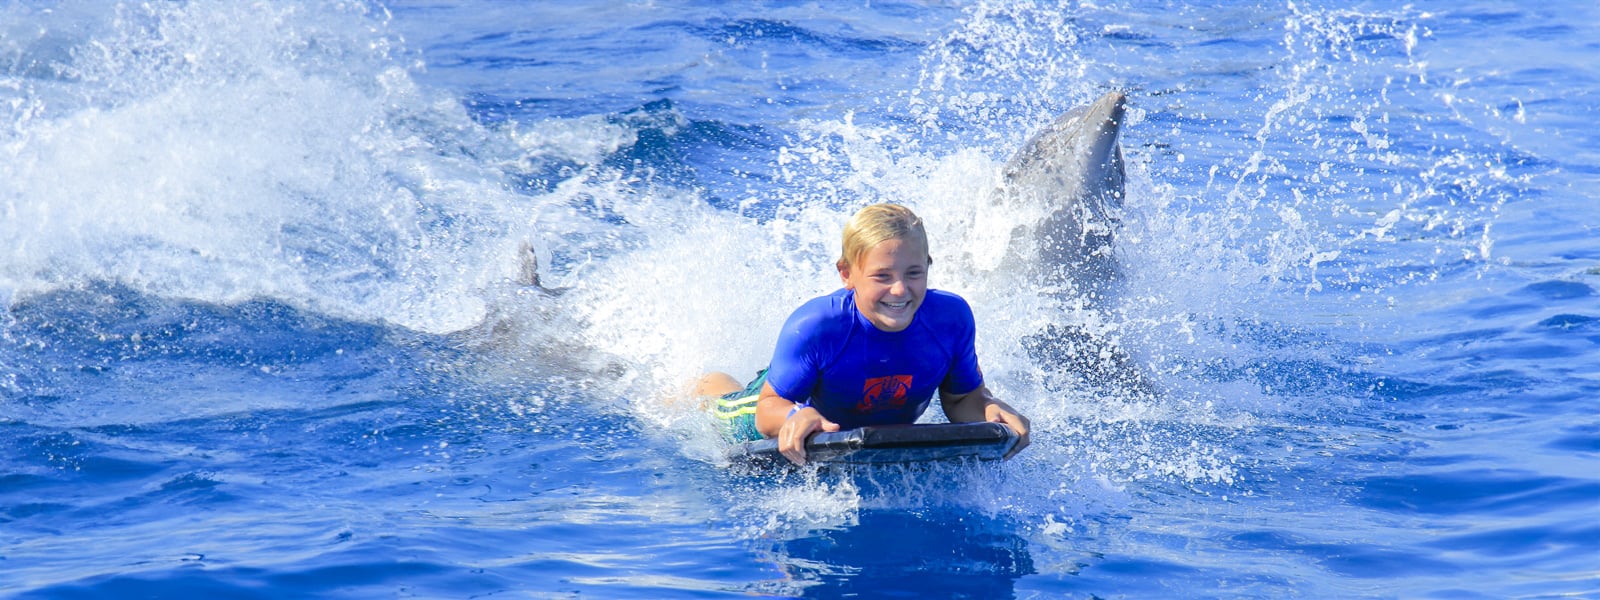 puerto vallarta dolphin ride on a boogie board